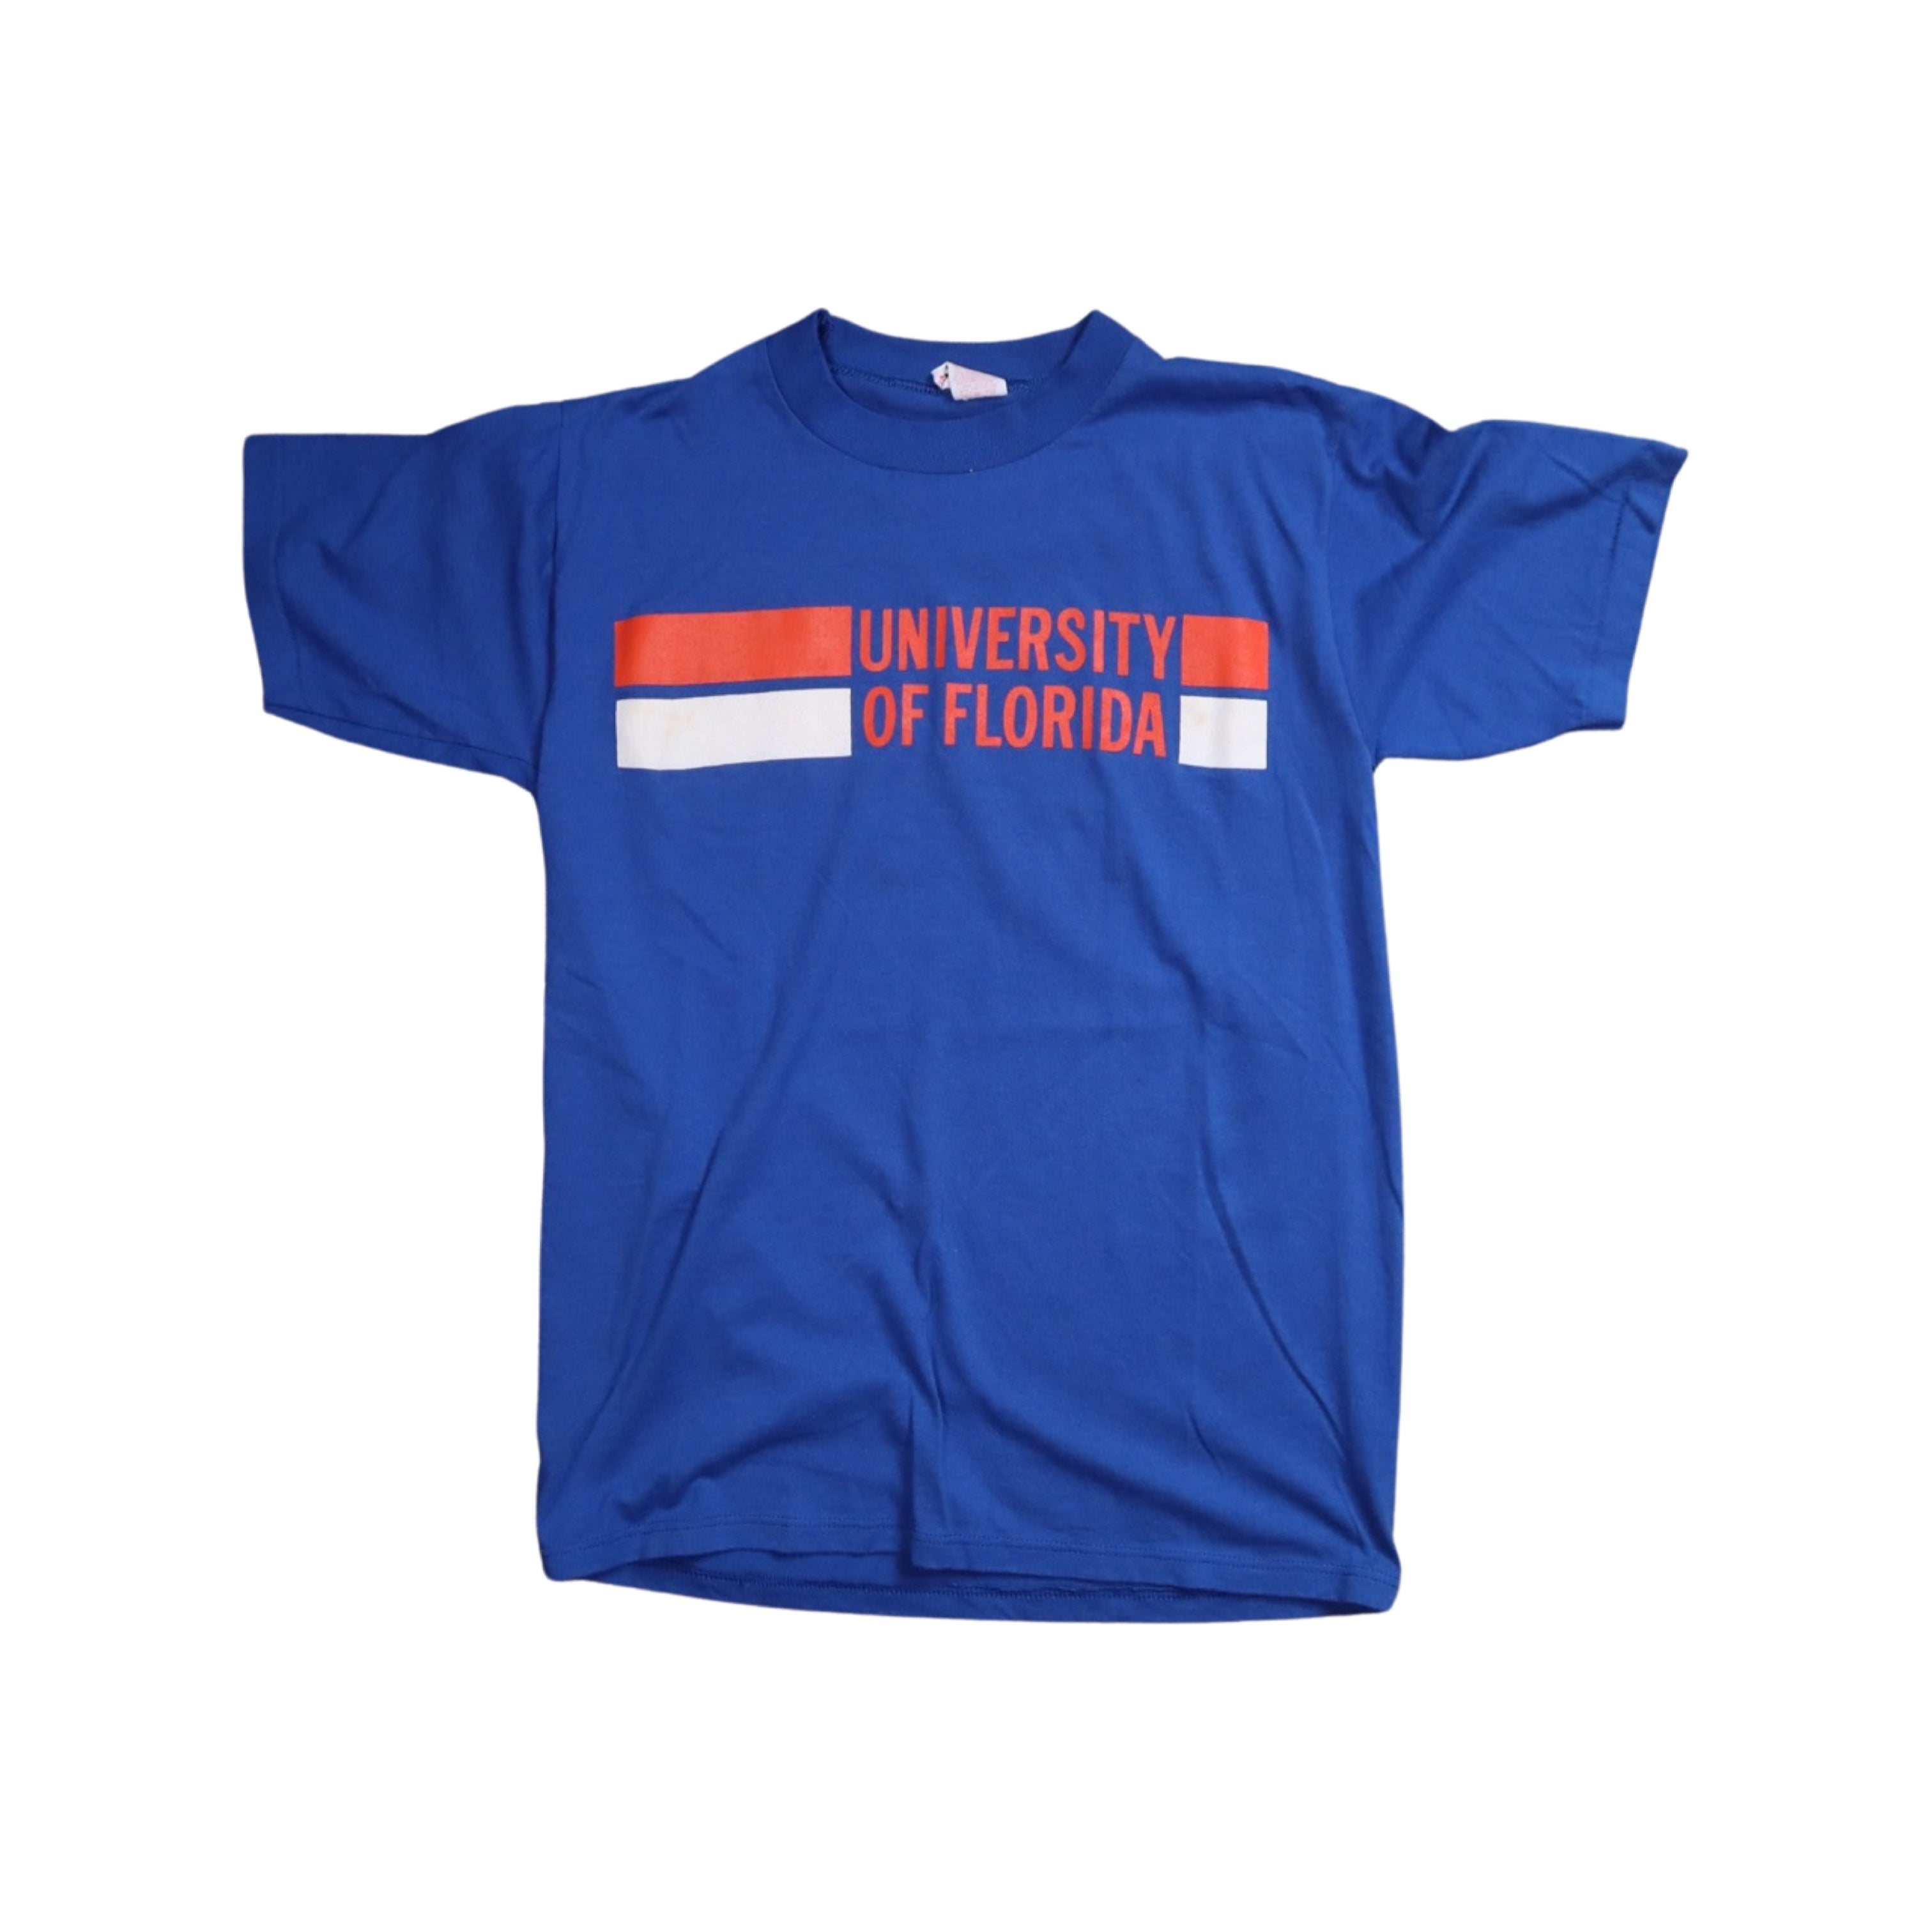 University of Florida 80s T-Shirt (Medium)